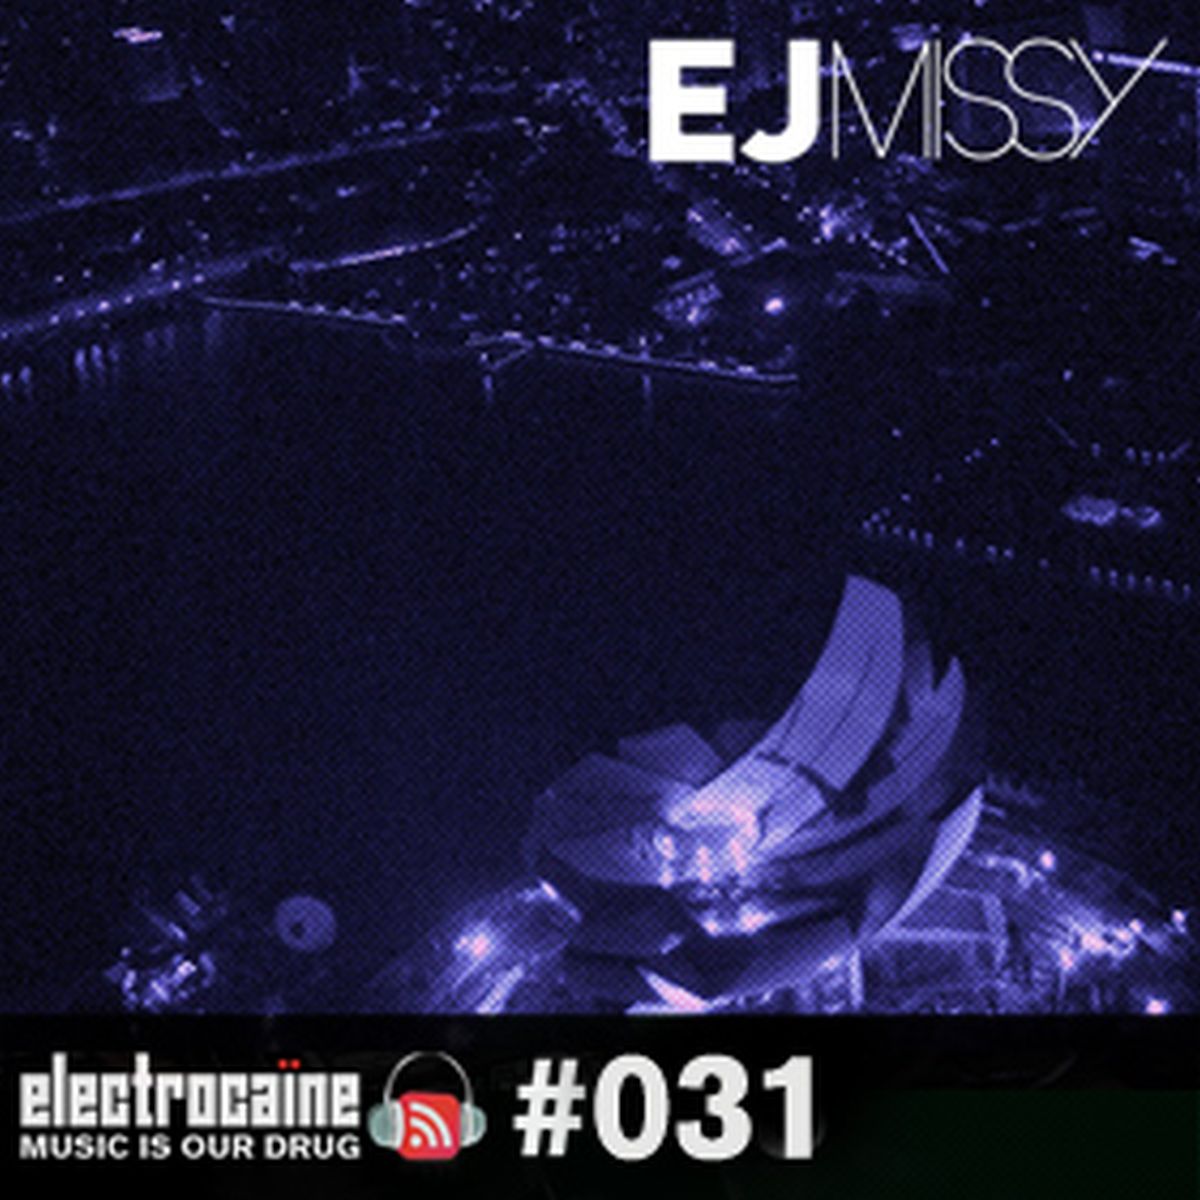 session #031 – EJ missy